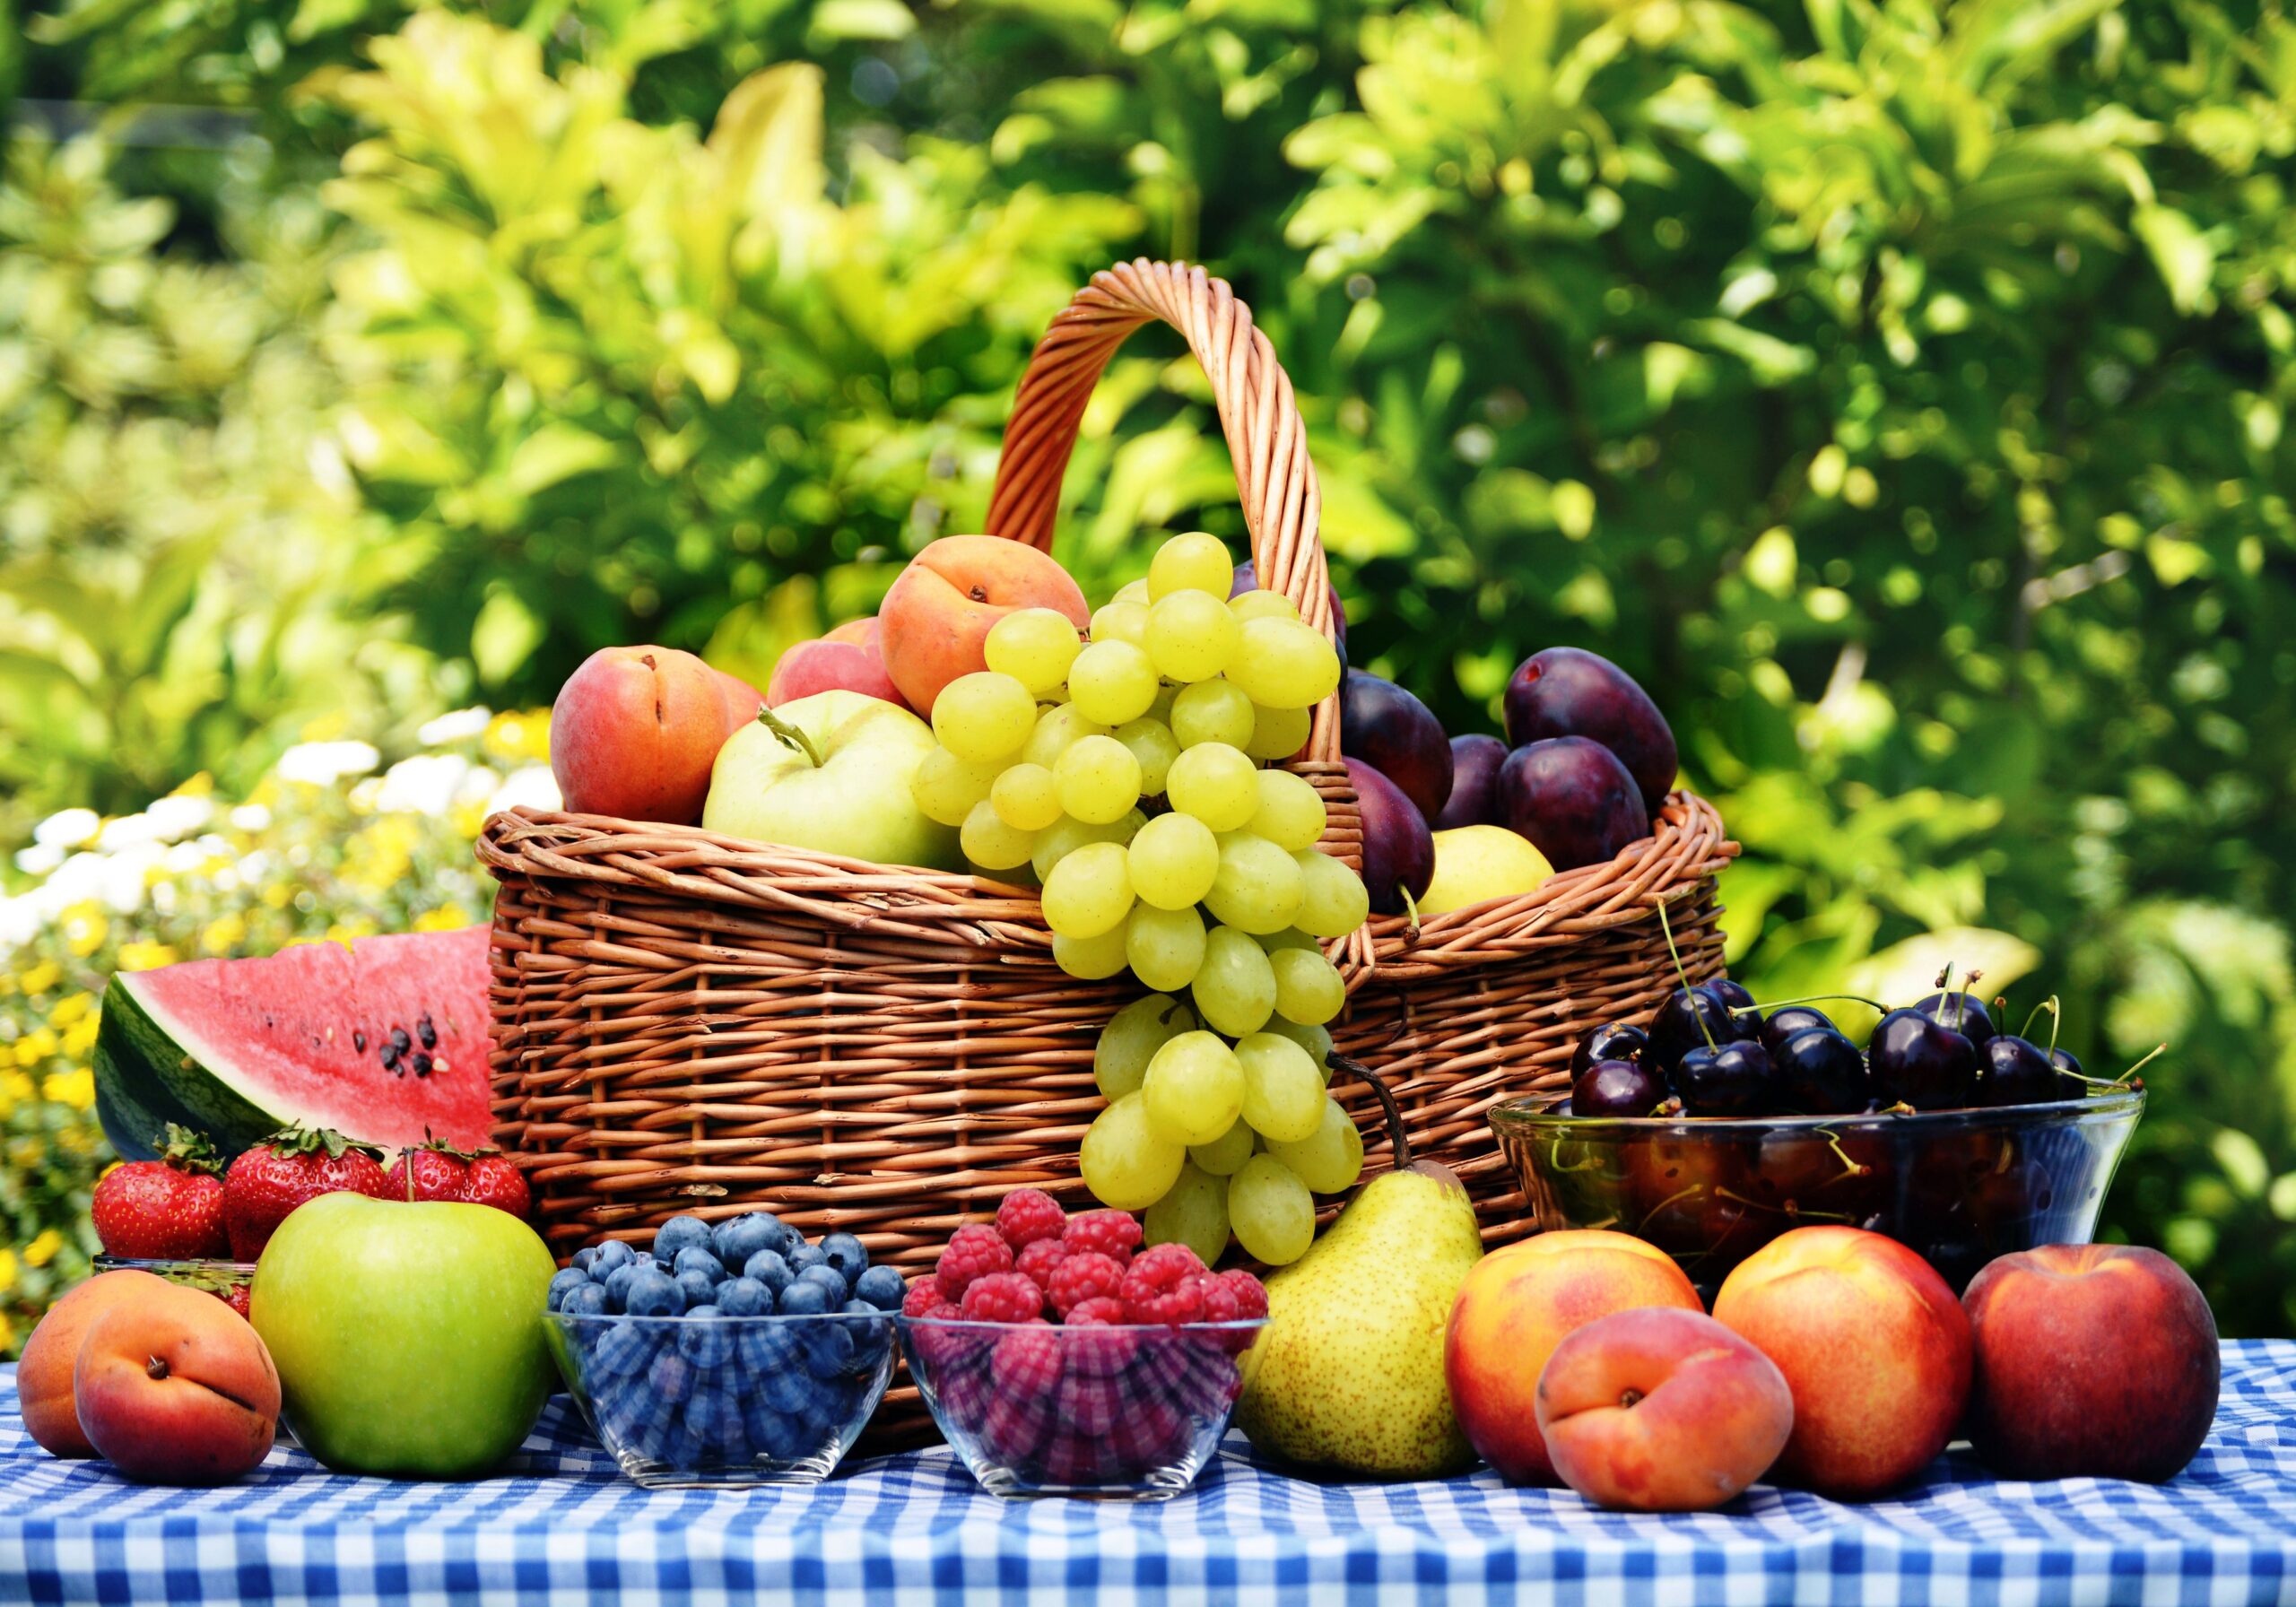 Best Low Sugar Fruits for Diabetics